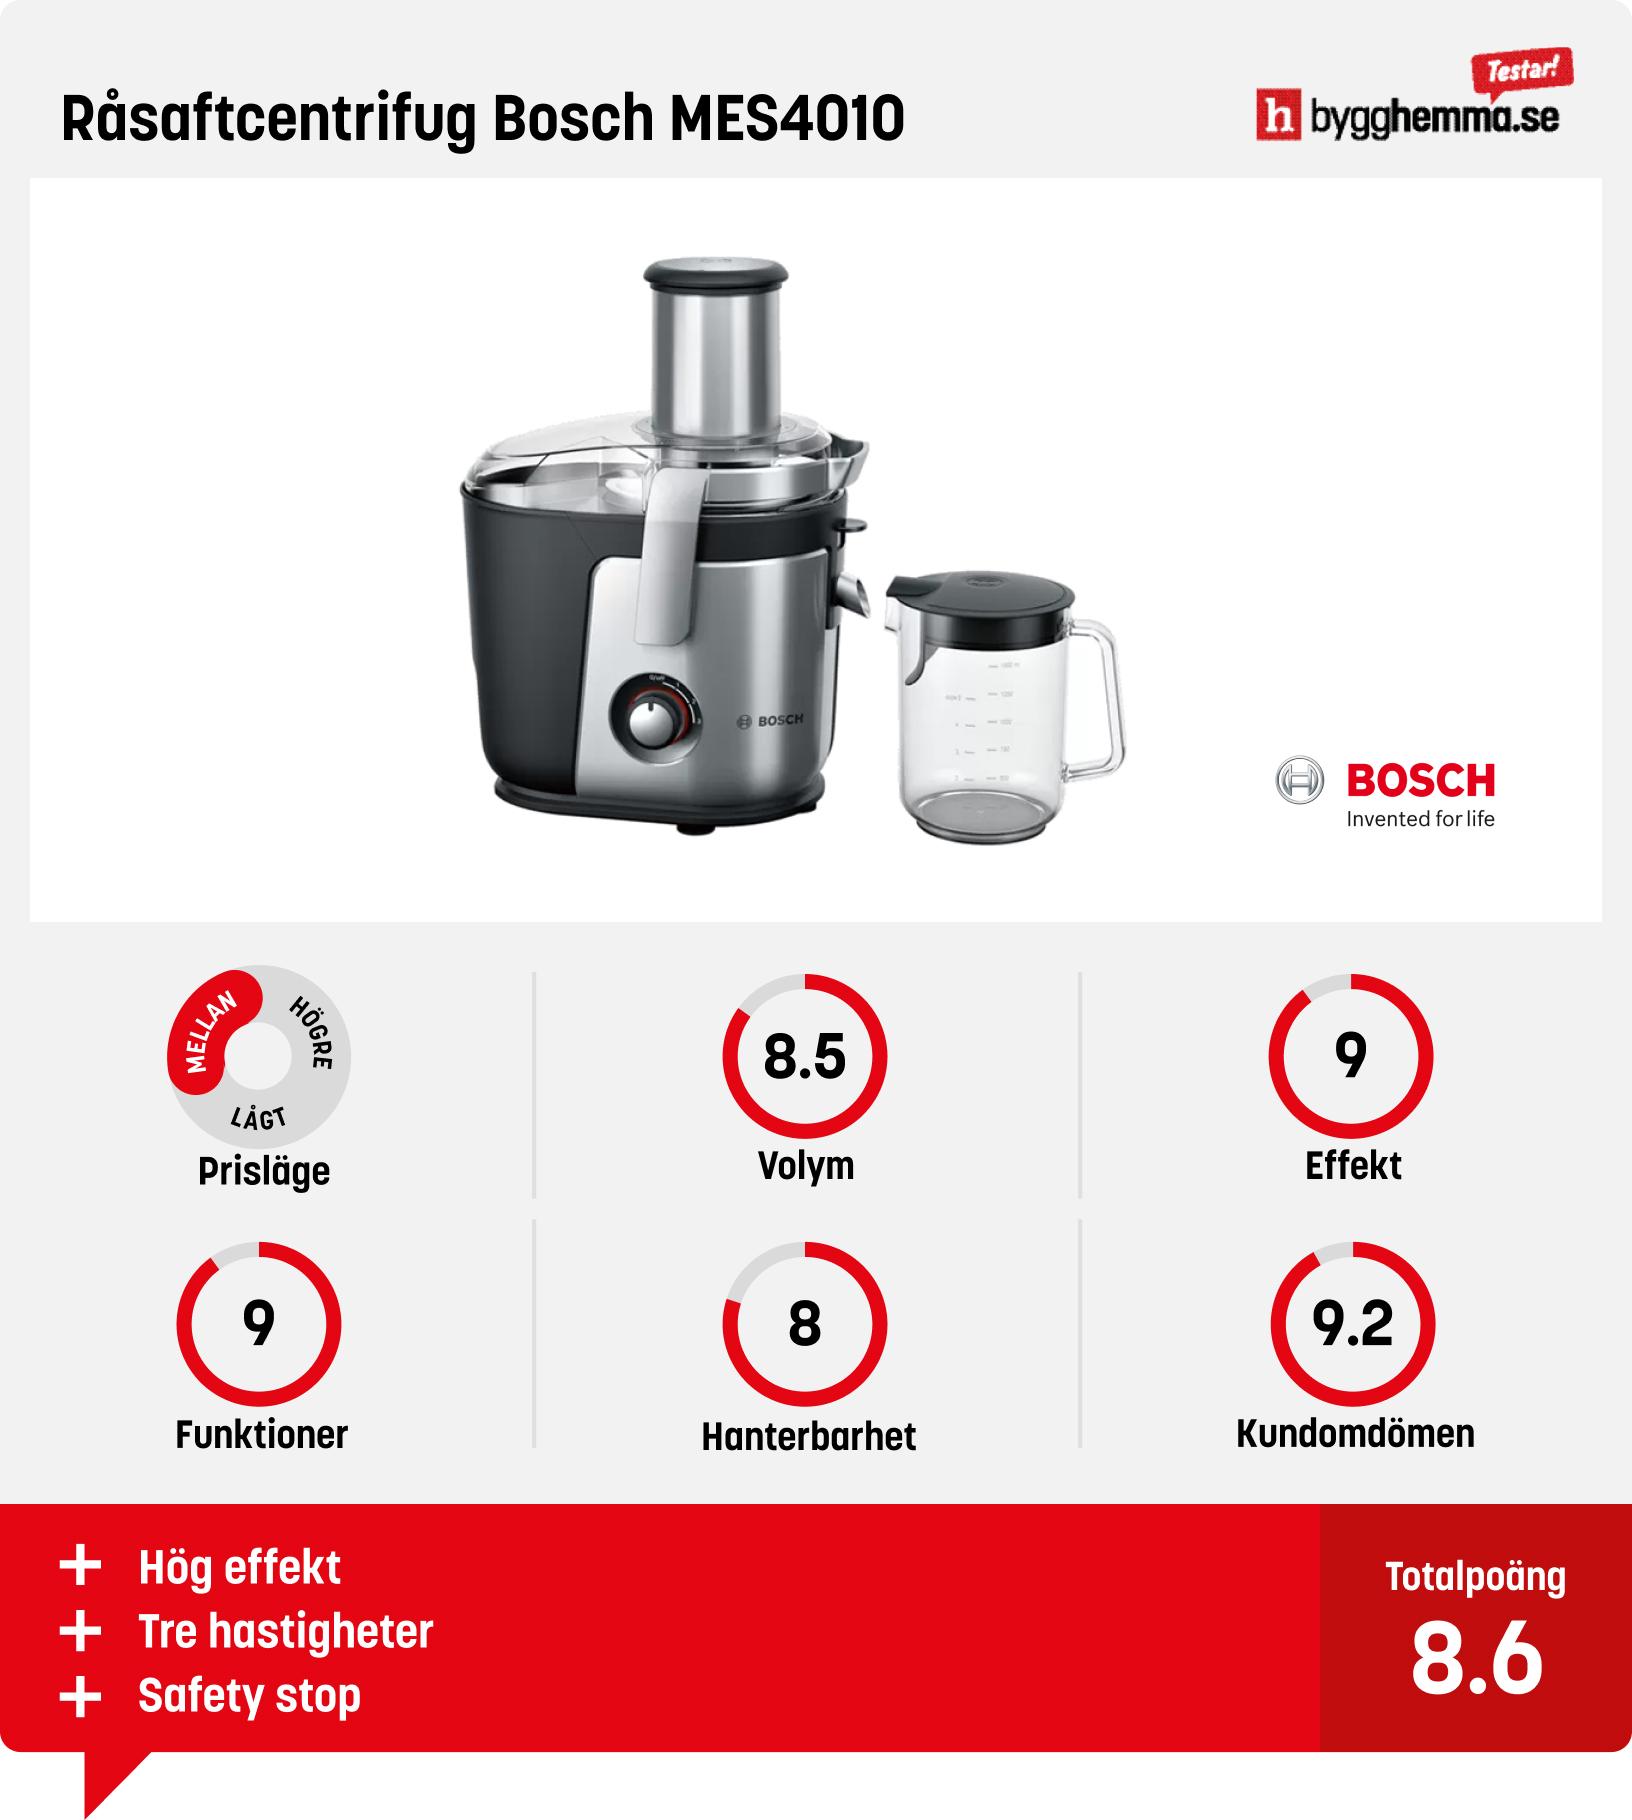 Råsaftcentrifrug bäst i test - Råsaftcentrifug Bosch MES4010